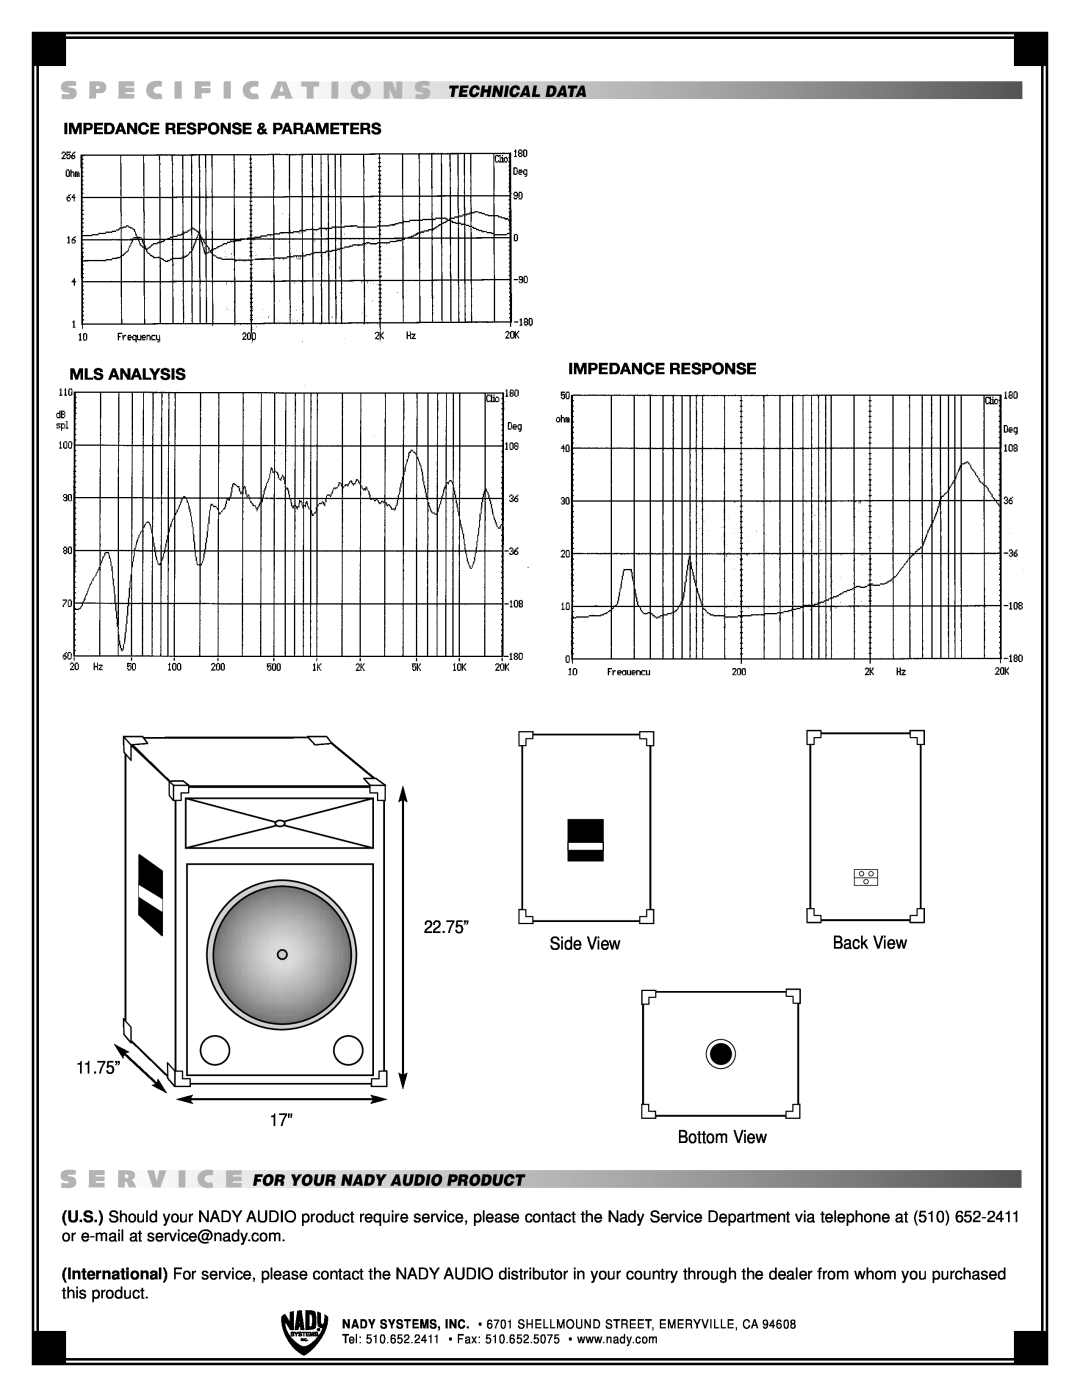 Nady Systems PS112 S P E C I F I C Ations, 11.75”, 22.75”, Side View, Bottom View, Technicaldata, S Ervice 